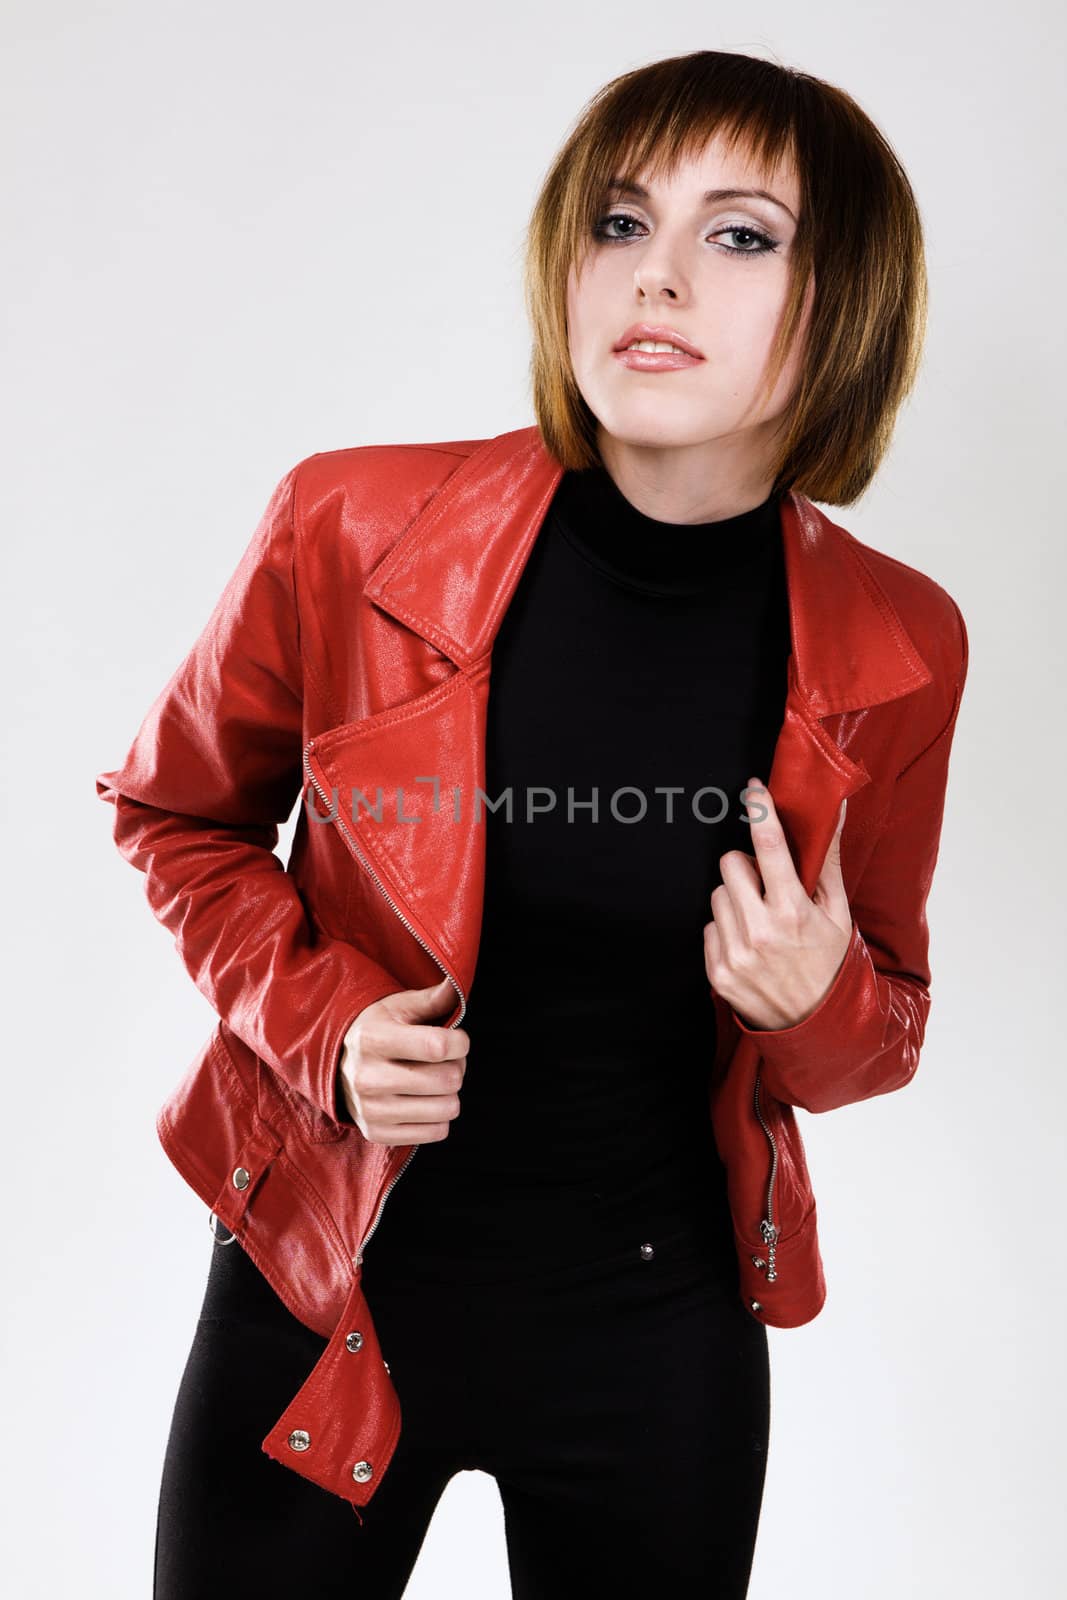 Beautiful model in red leather jacket by Gdolgikh